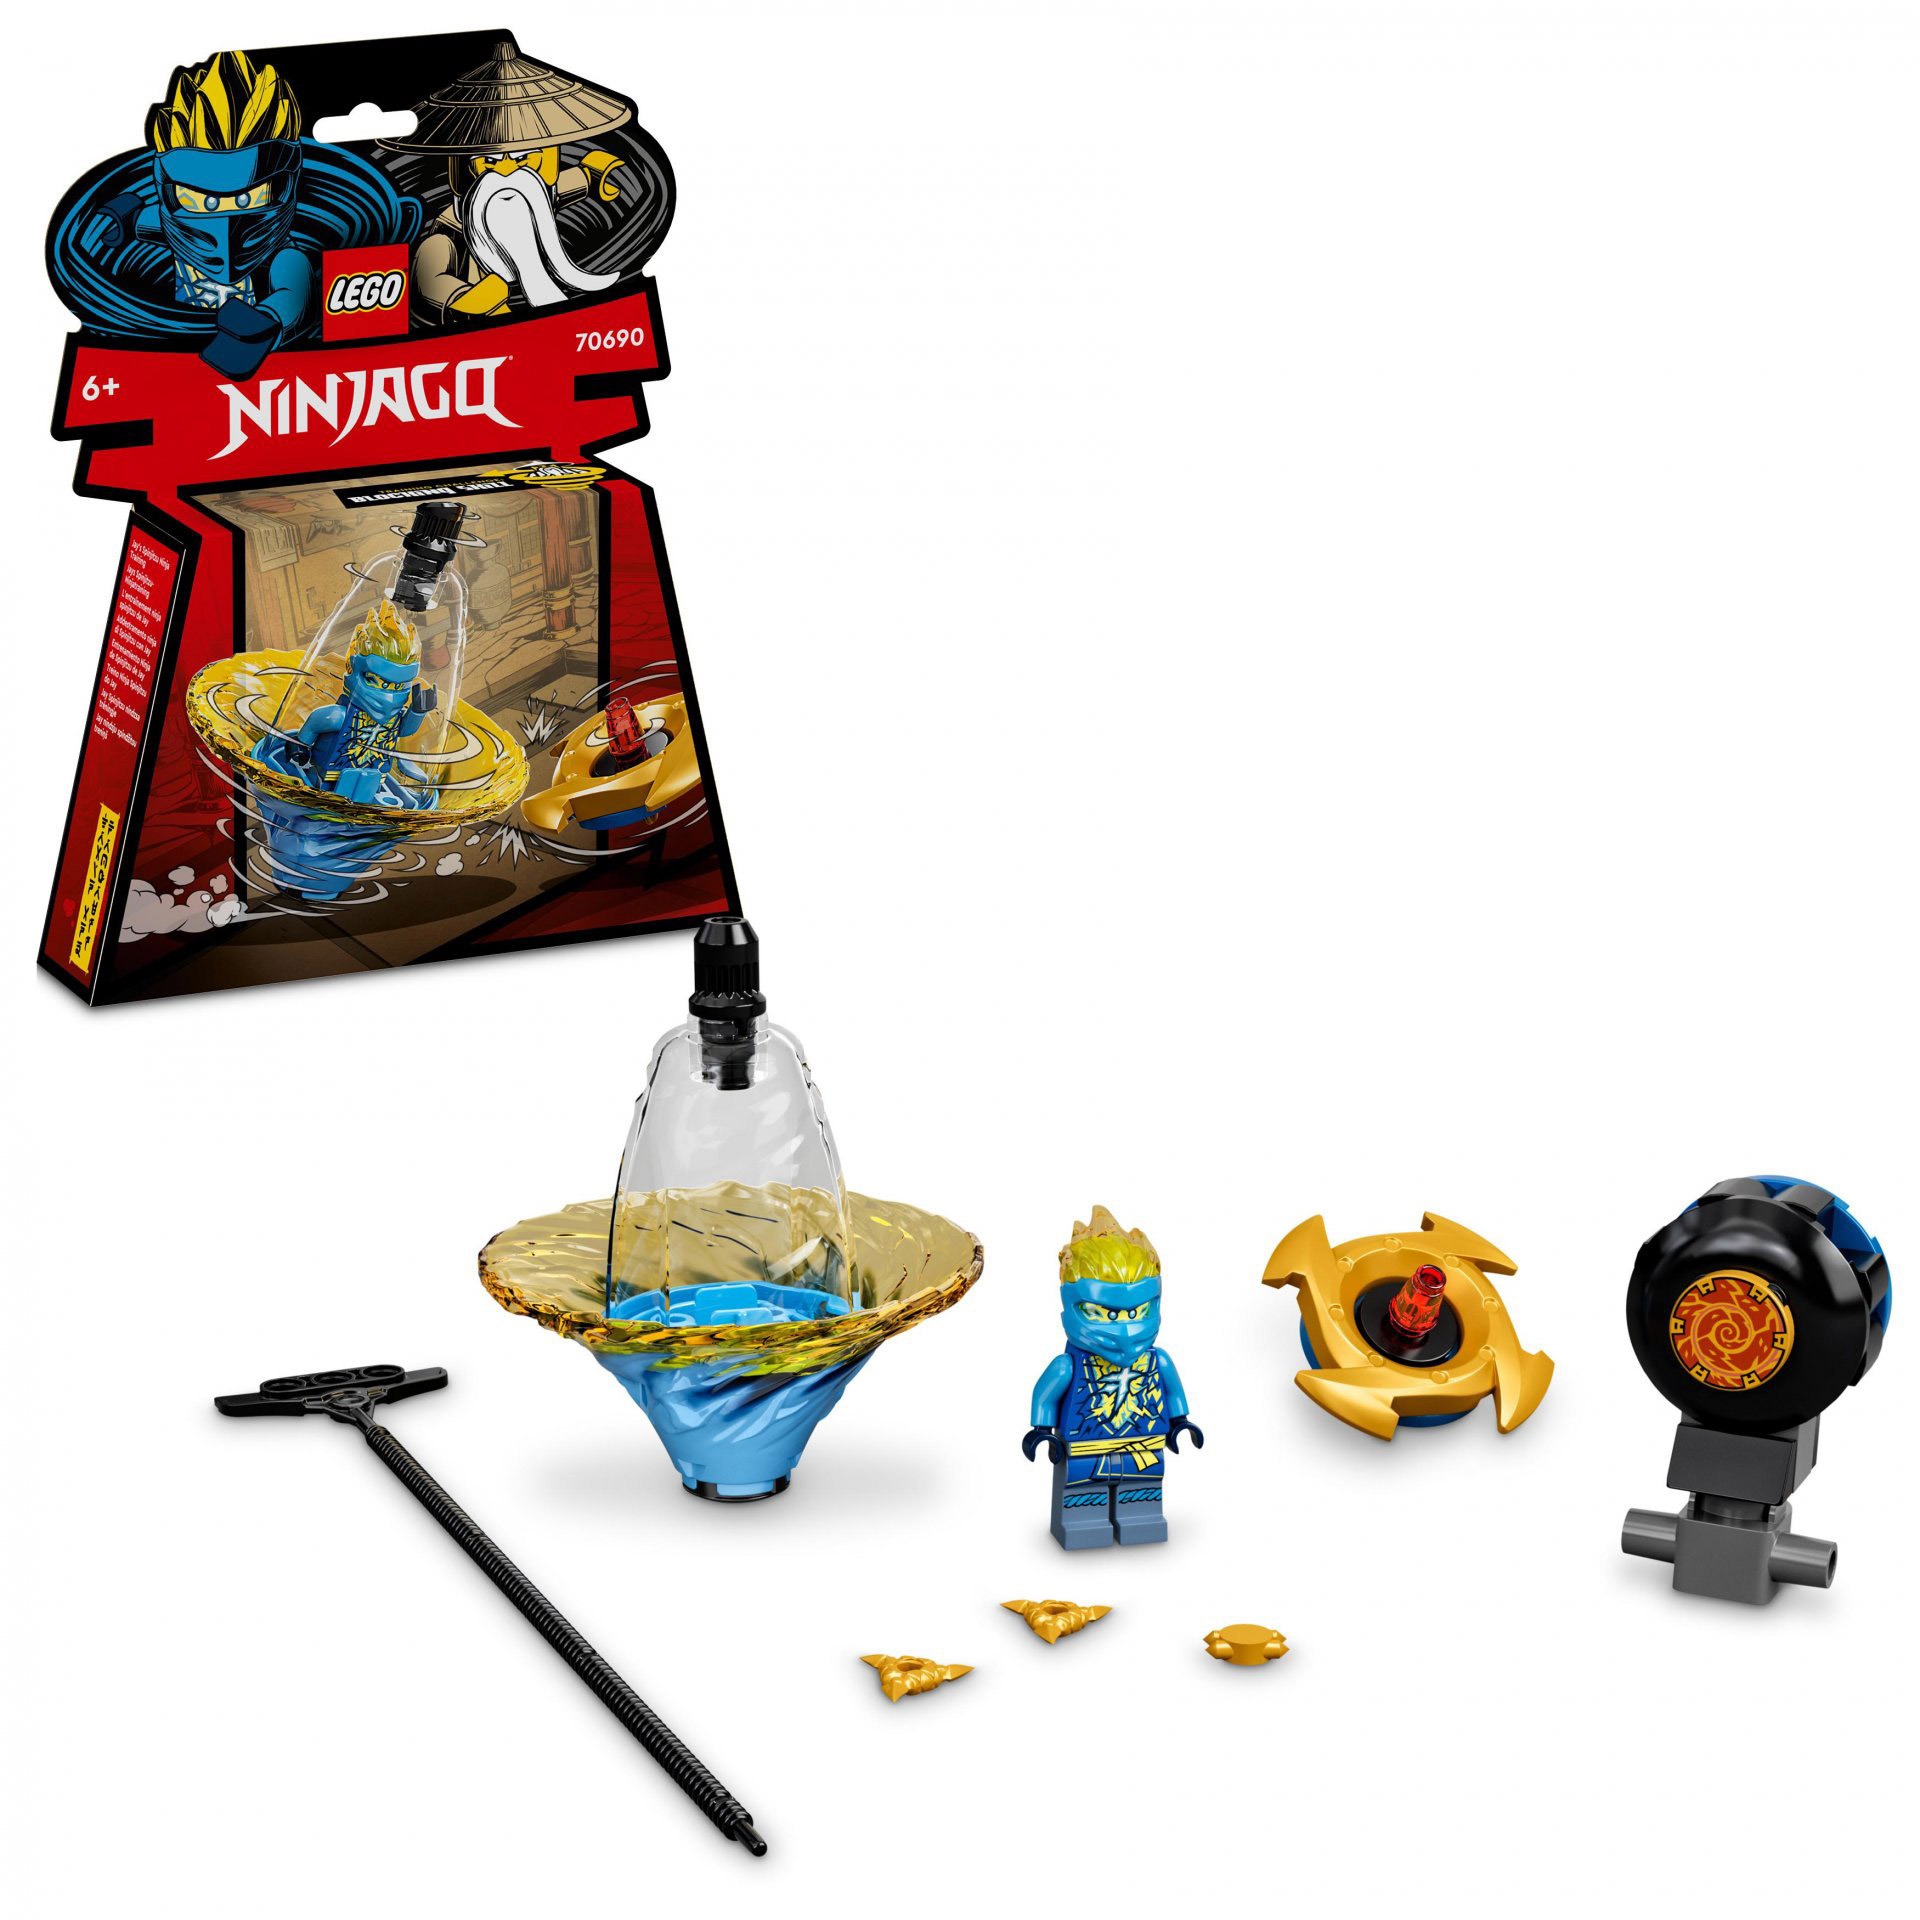 LEGO NINJAGO Addestramento Ninja di Spinjitzu con Jay, Action Figure, Trottola G 70690, , large